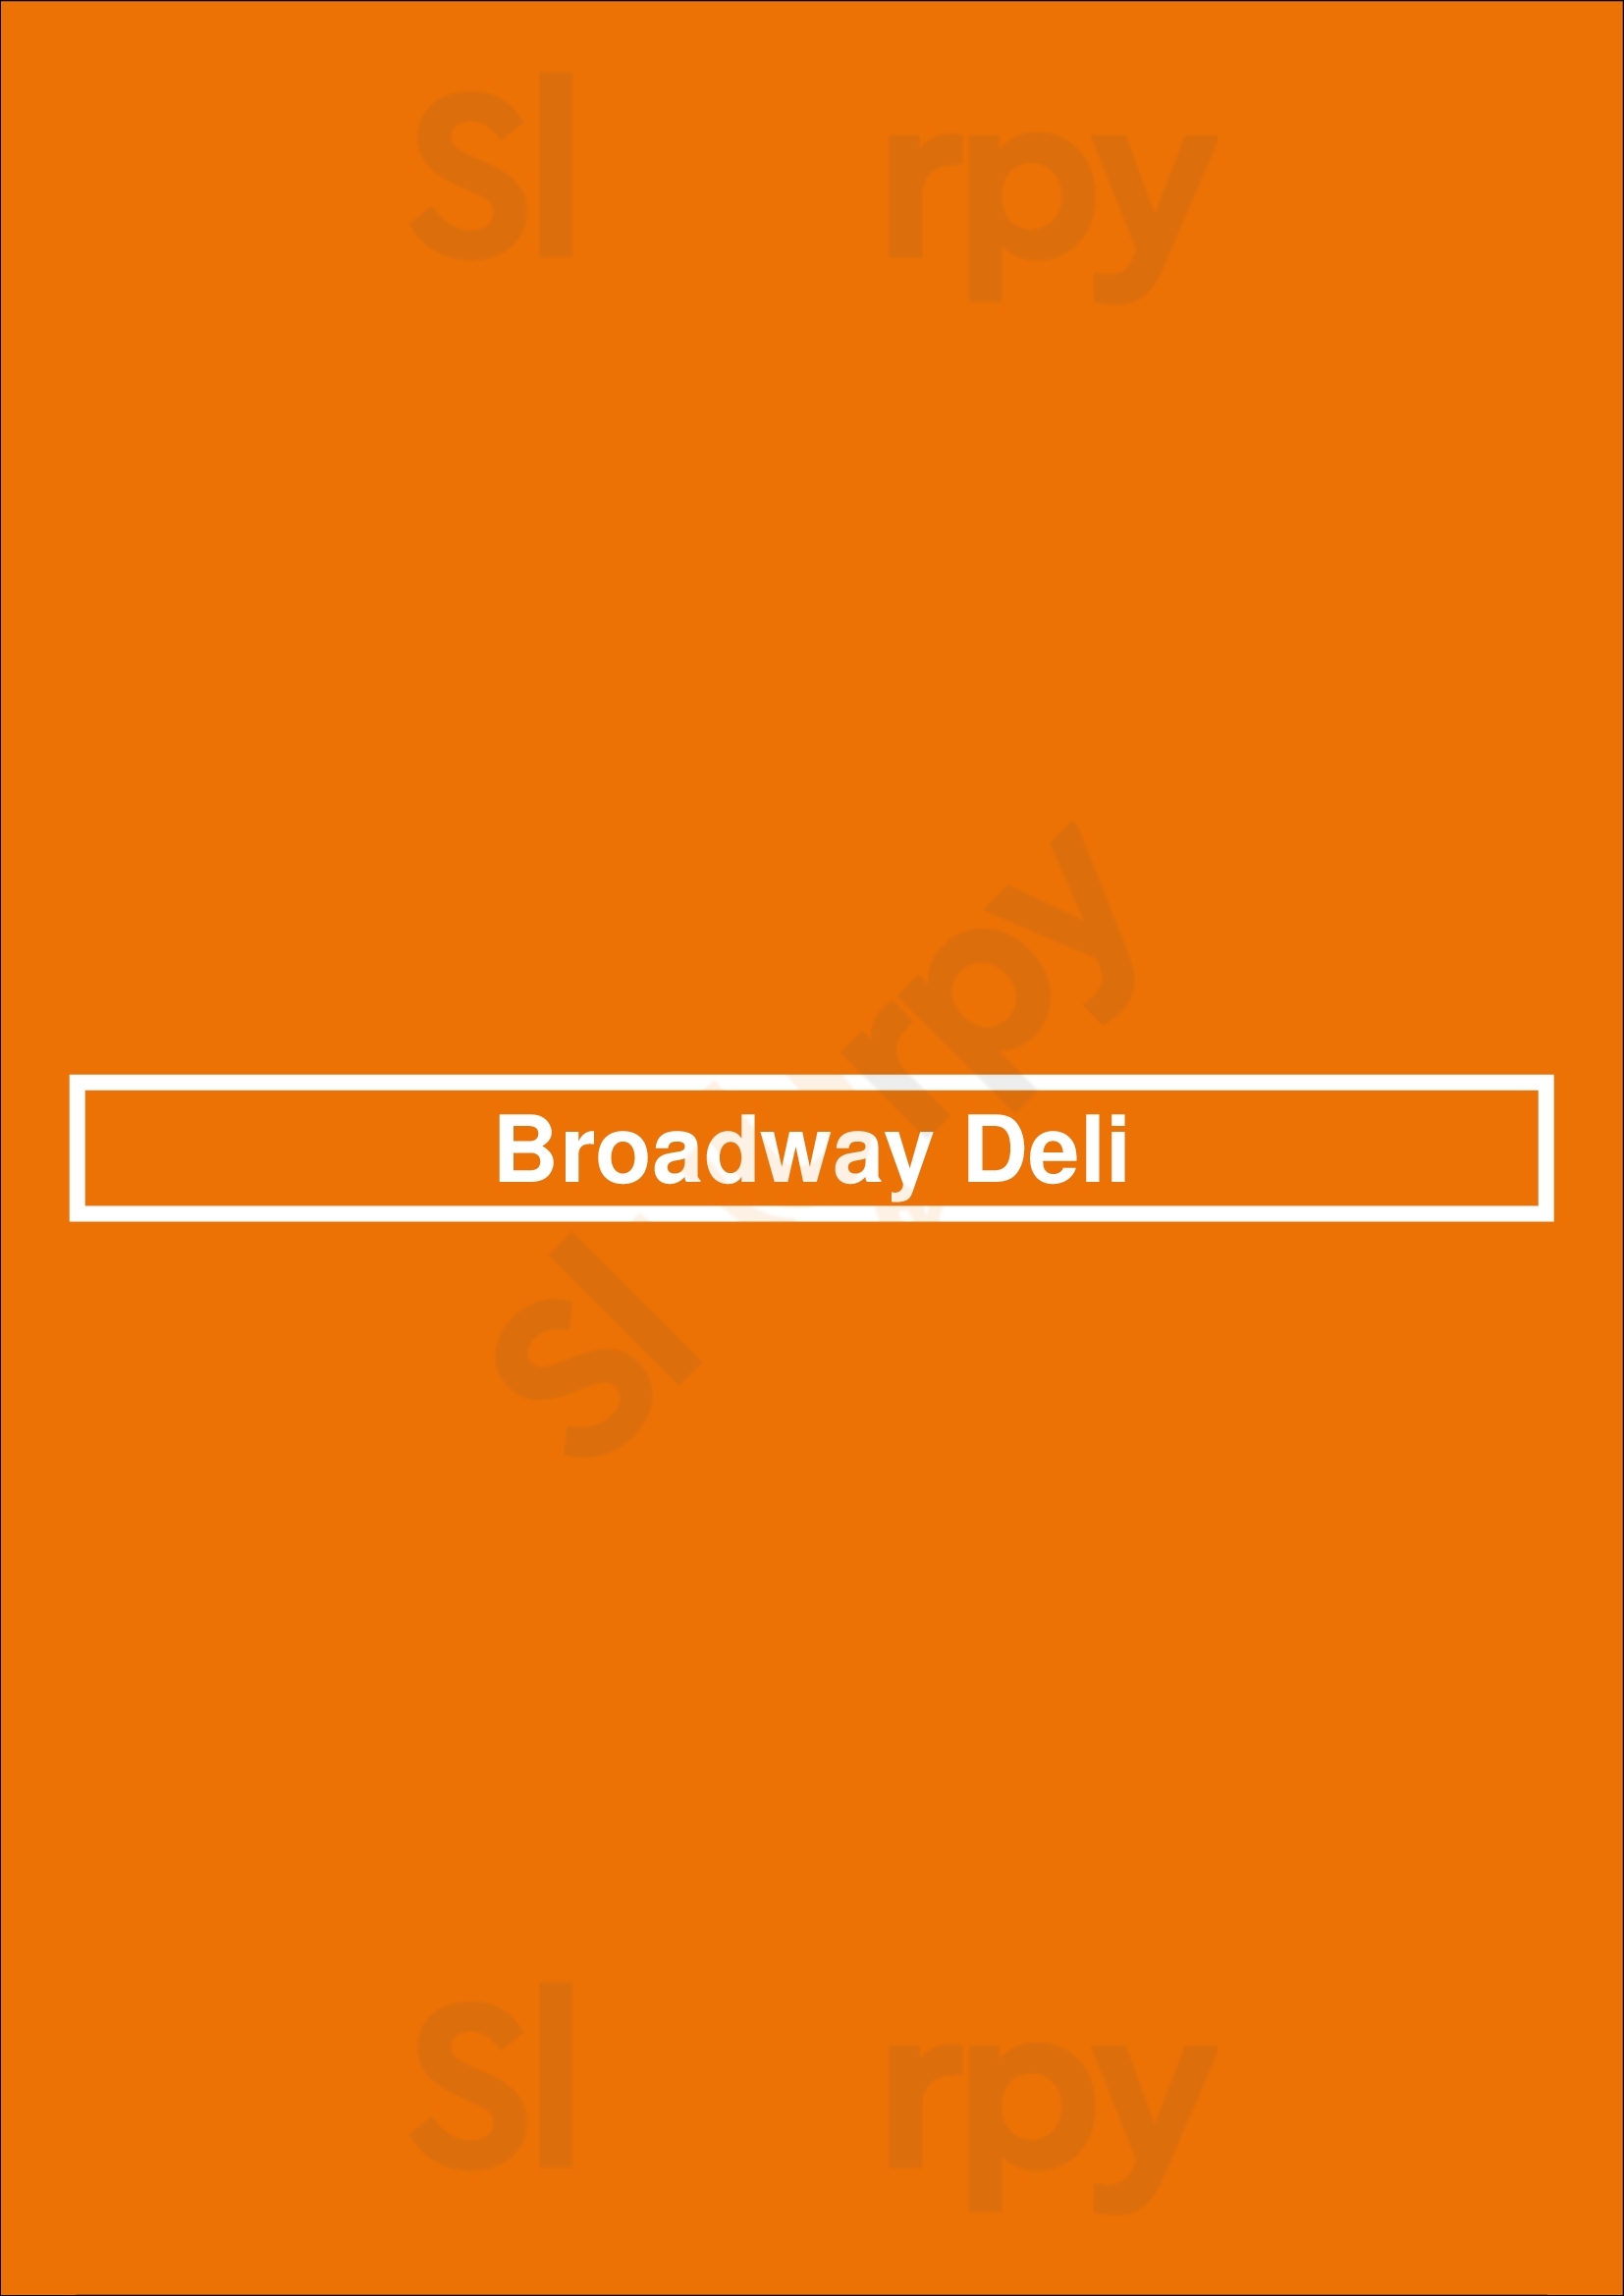 Broadway Deli Lancaster Menu - 1